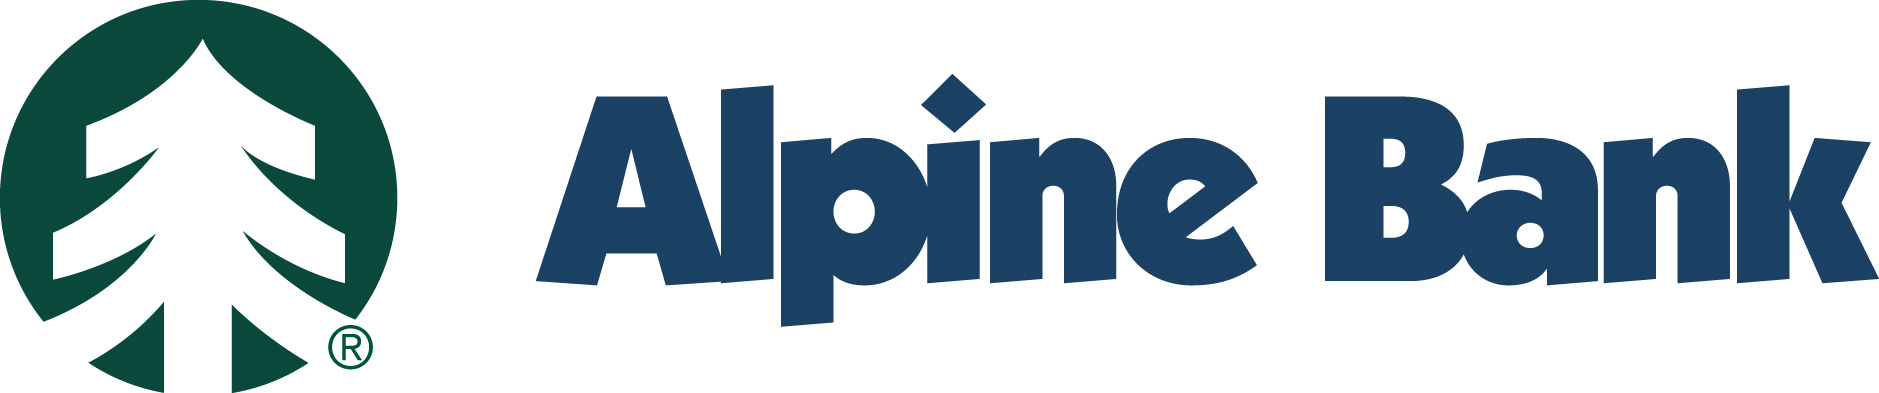 Alpine Bank Logo photo - 1